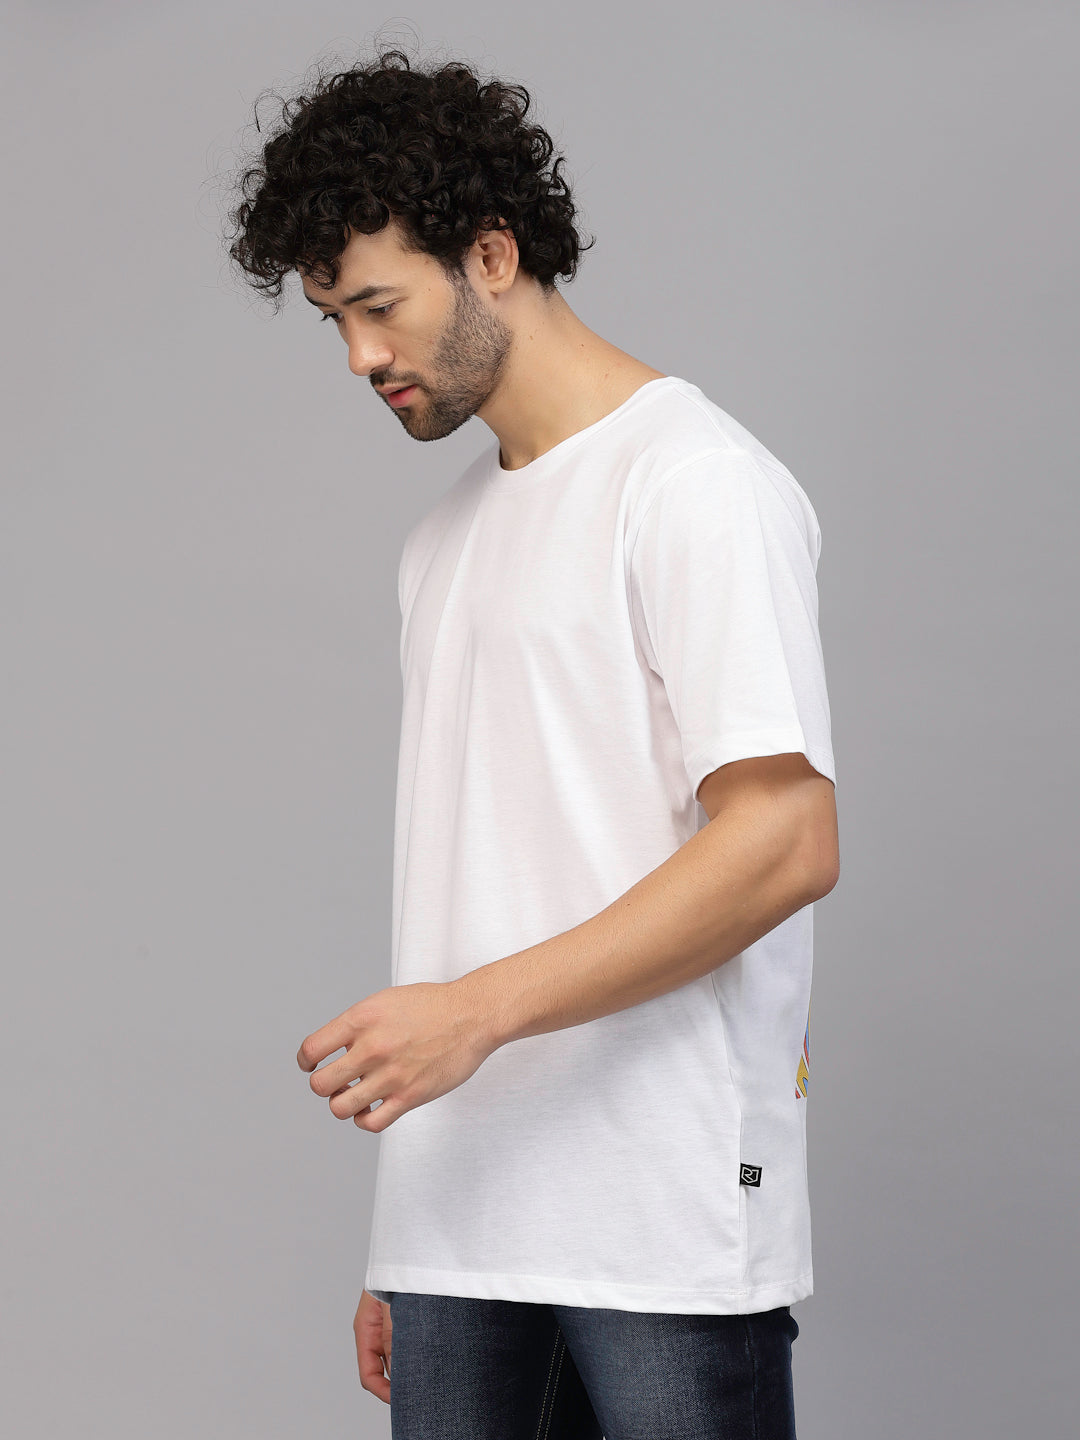 Printed Oversized Half Sleeves Round Neck Cotton T-Shirt